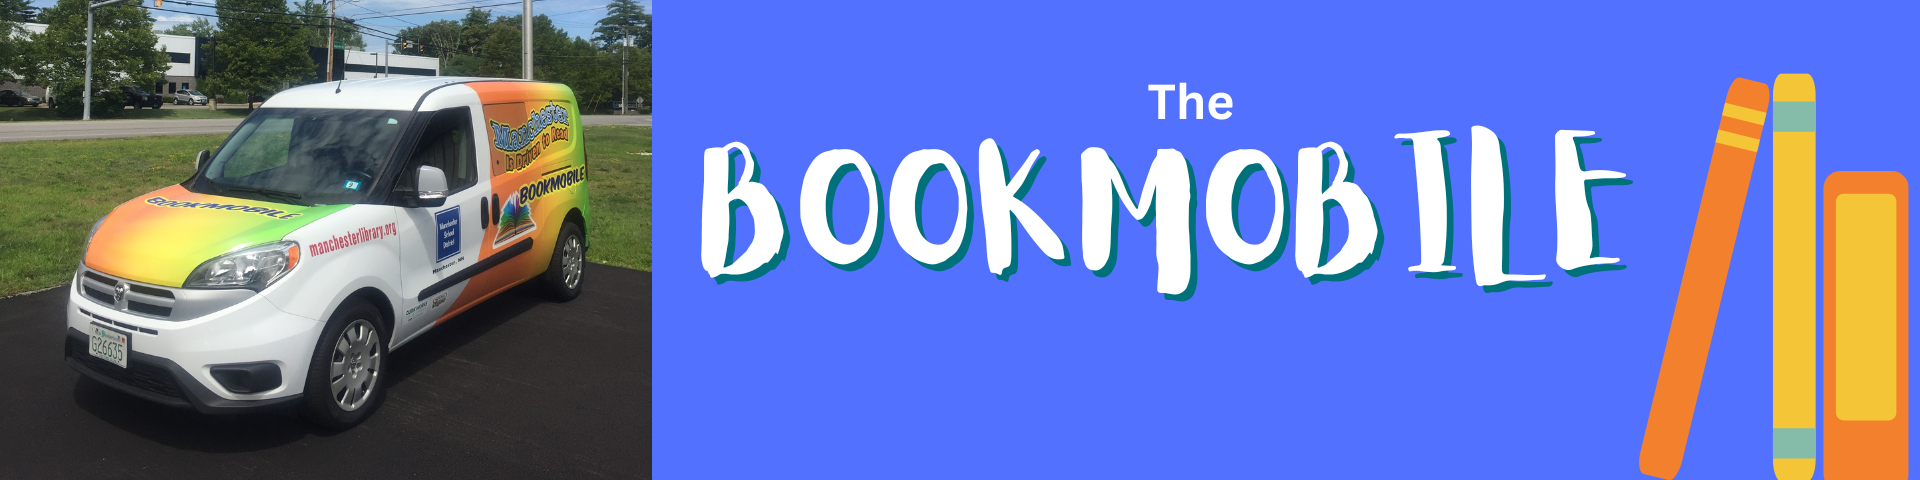 Bookmobile Title Header